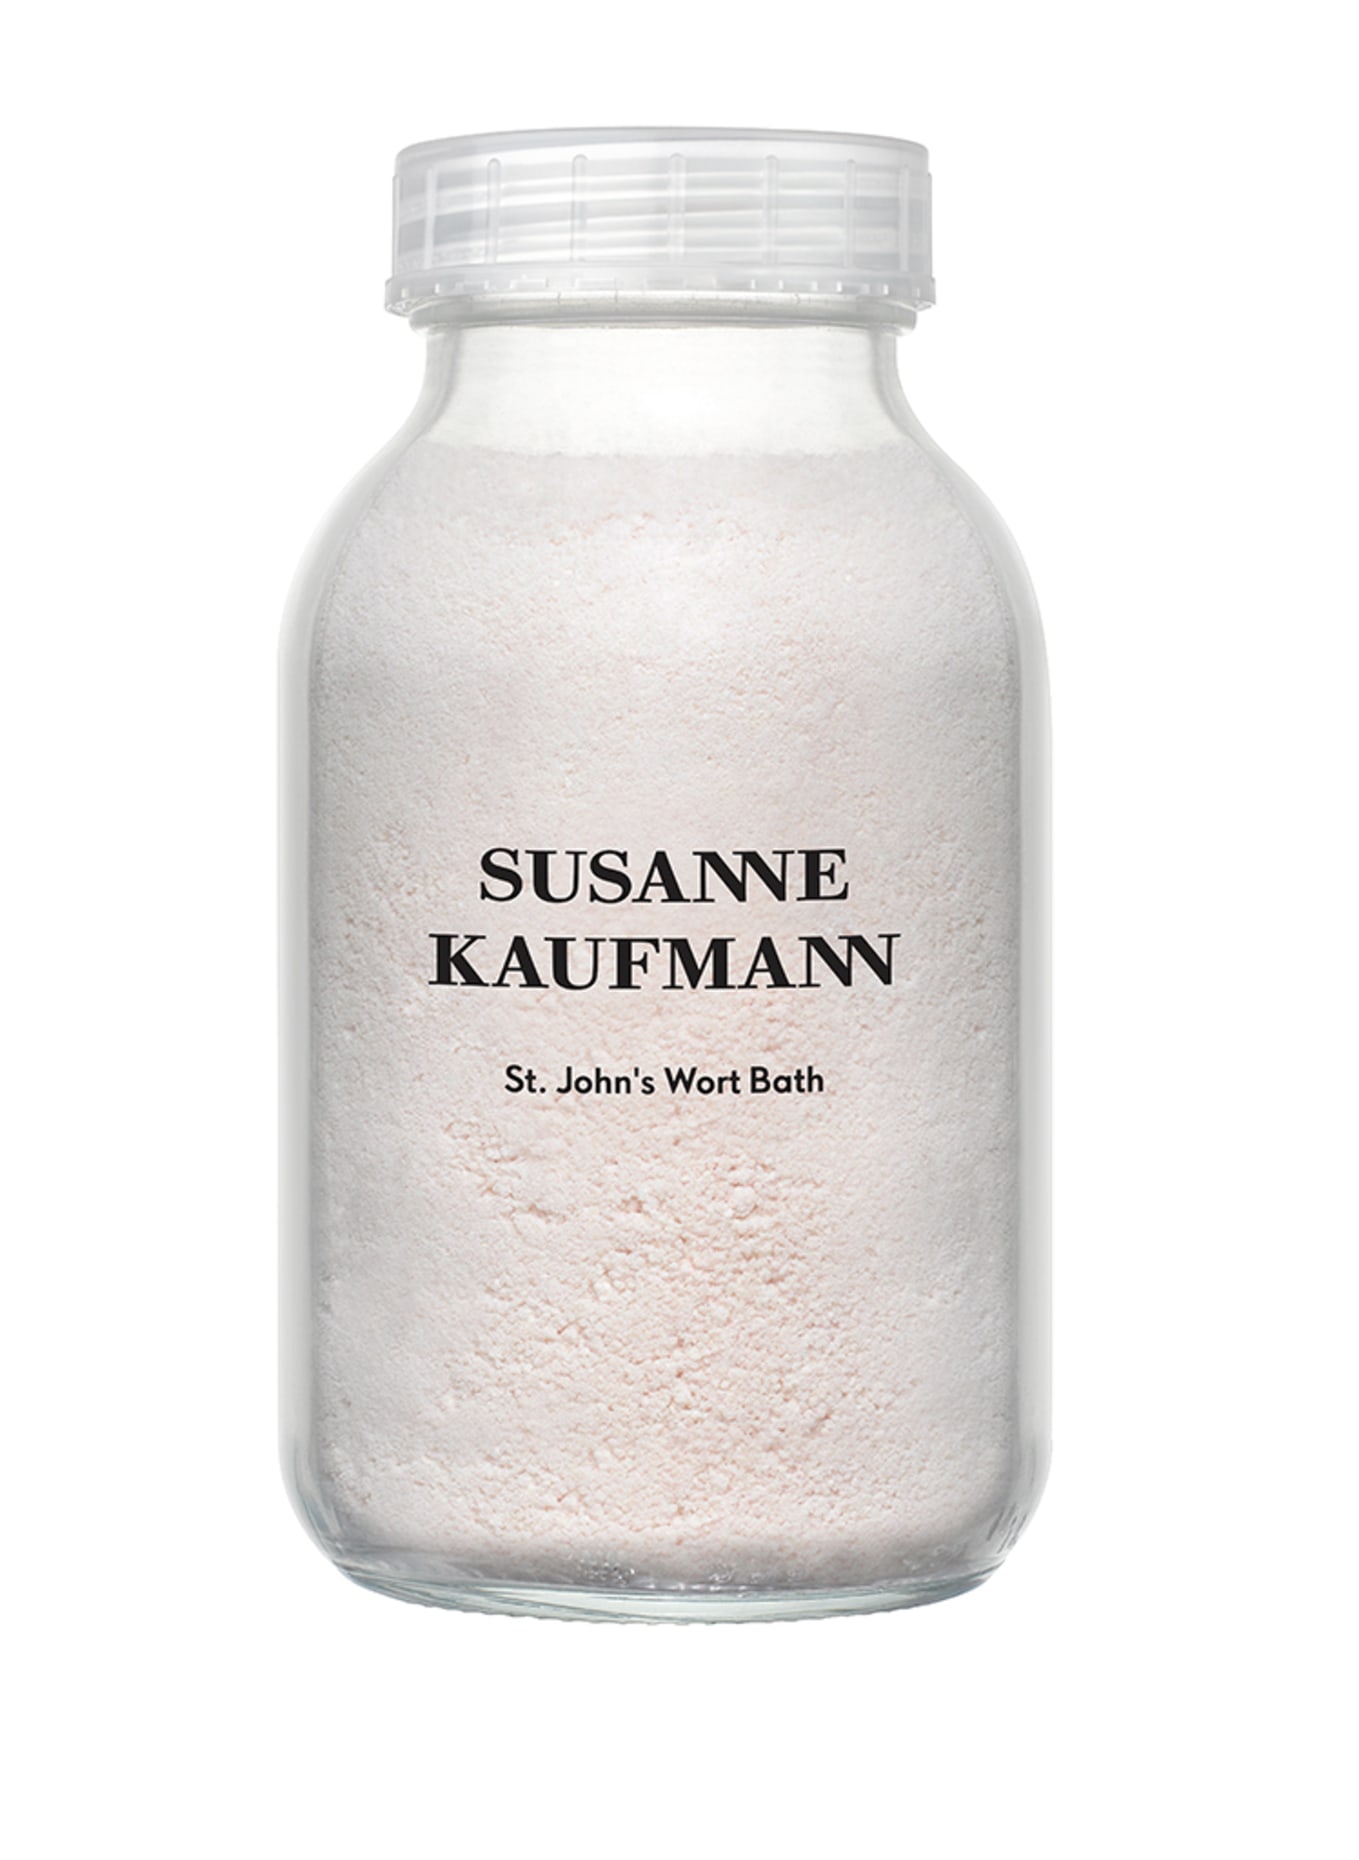 SUSANNE KAUFMANN ST. JOHN'S WORT BATH (Bild 1)